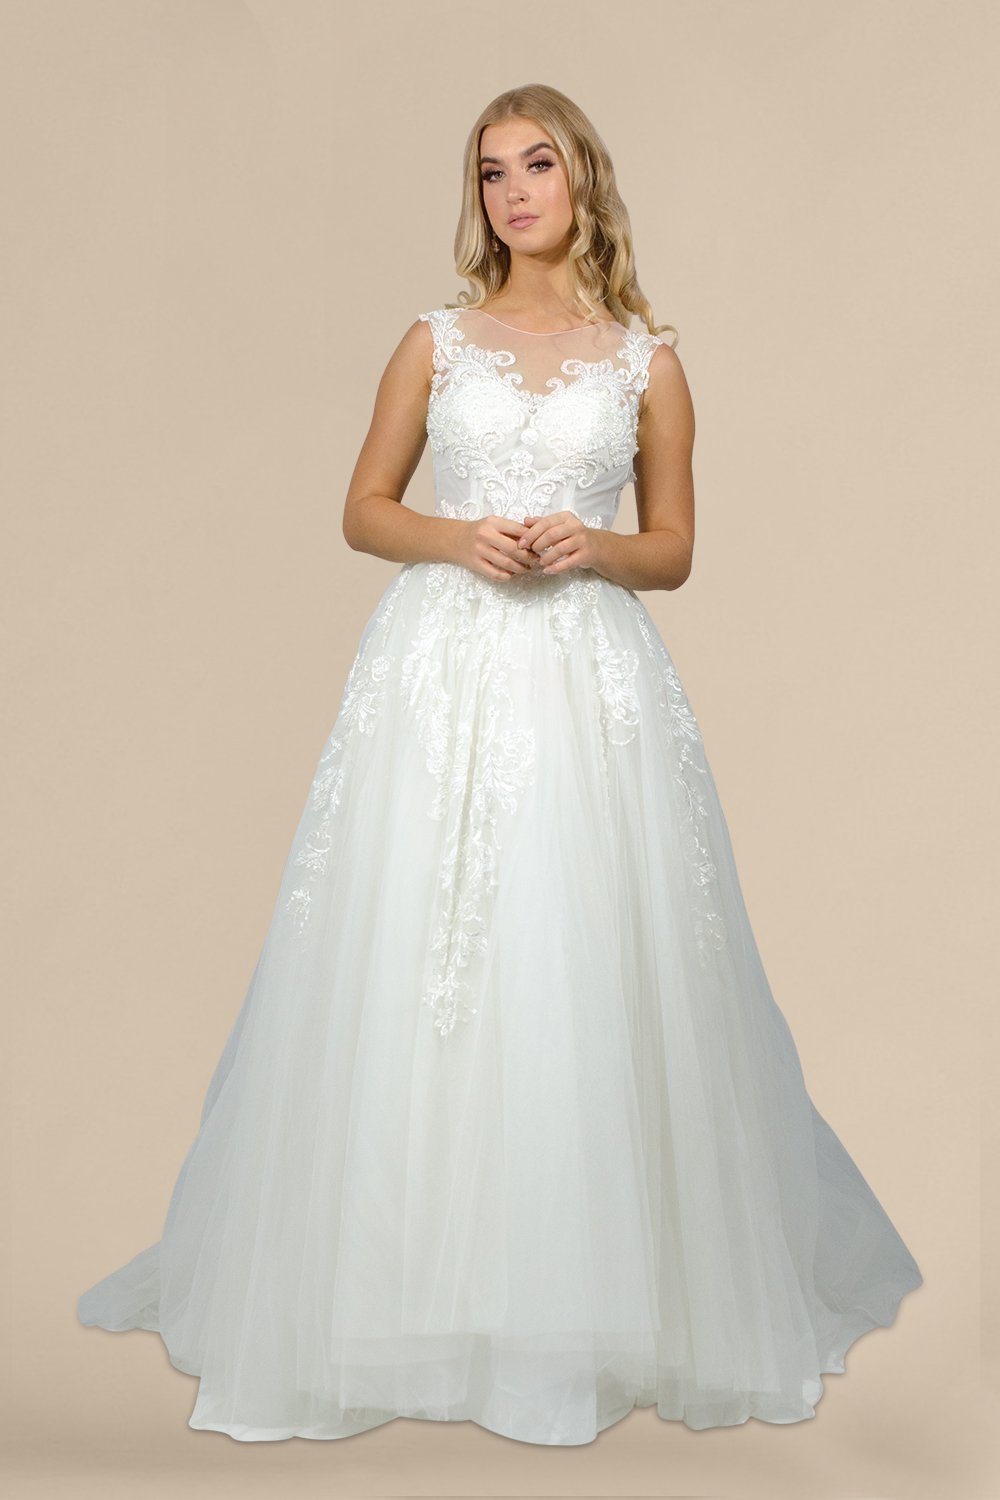 lace bodice tulle A line wedding dress custom made australia envious bridal & formal